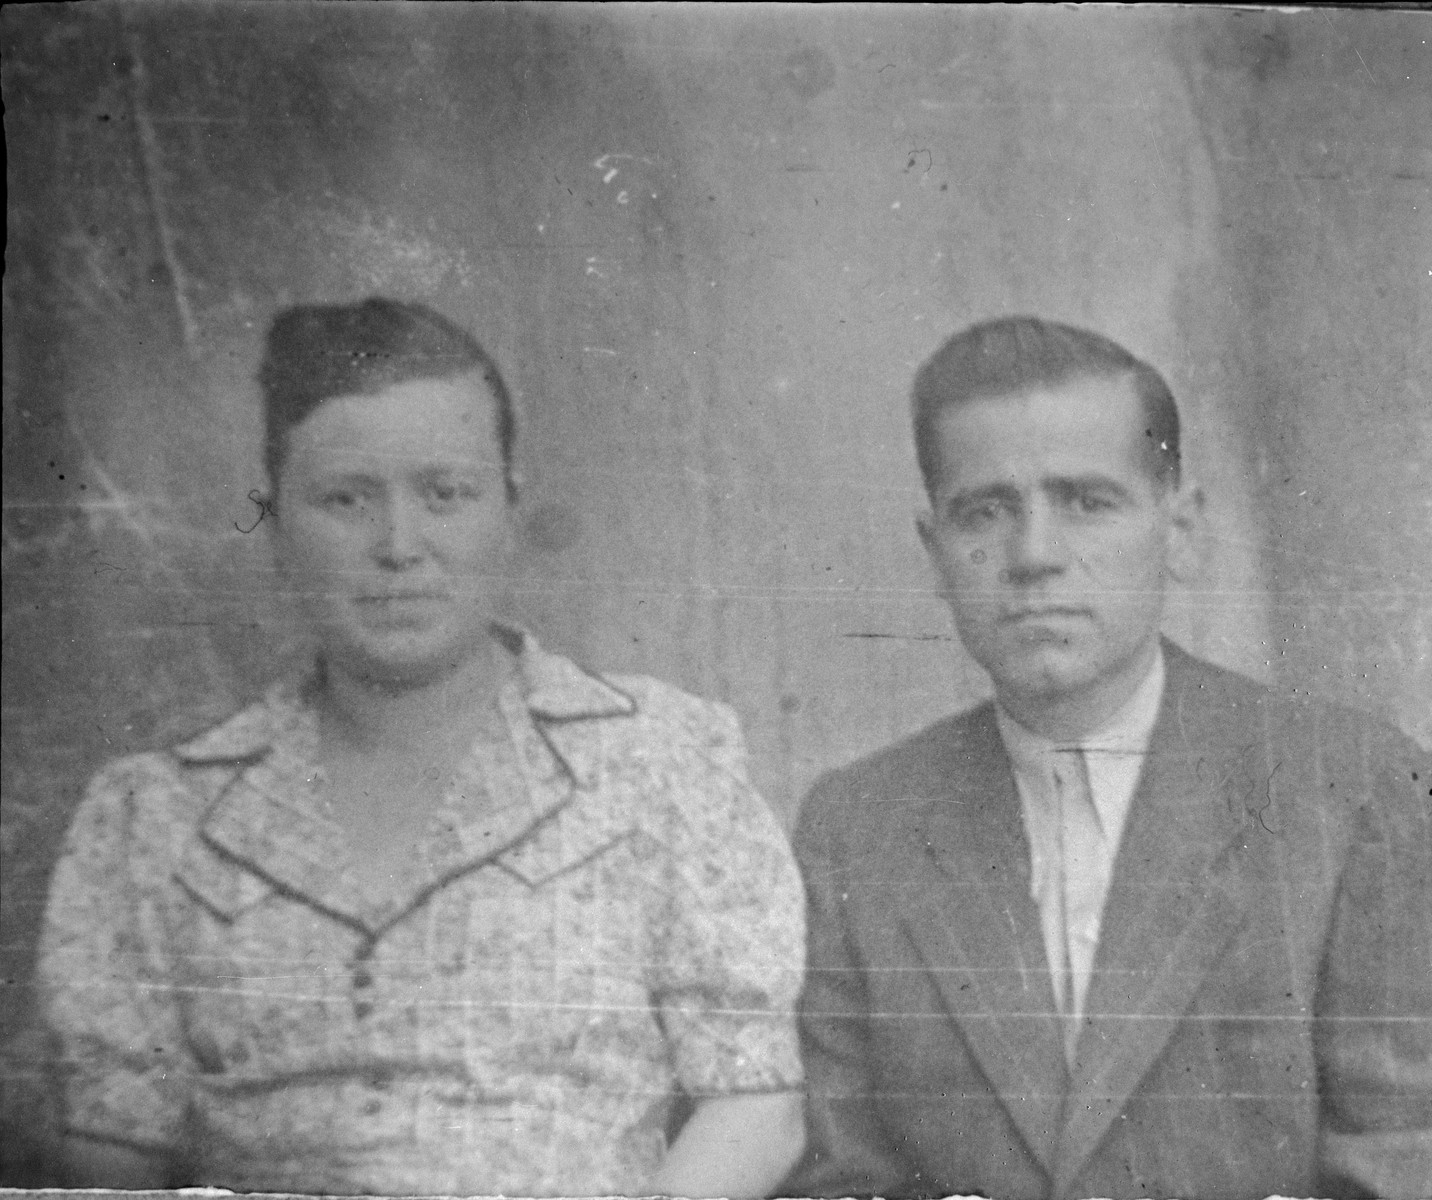 Portrait of Isak Pardo, son of Solomon Pardo, and Isak's wife, Sol.  Isak was a merchant.  They lived at Zvornitska 10 in Bitola.